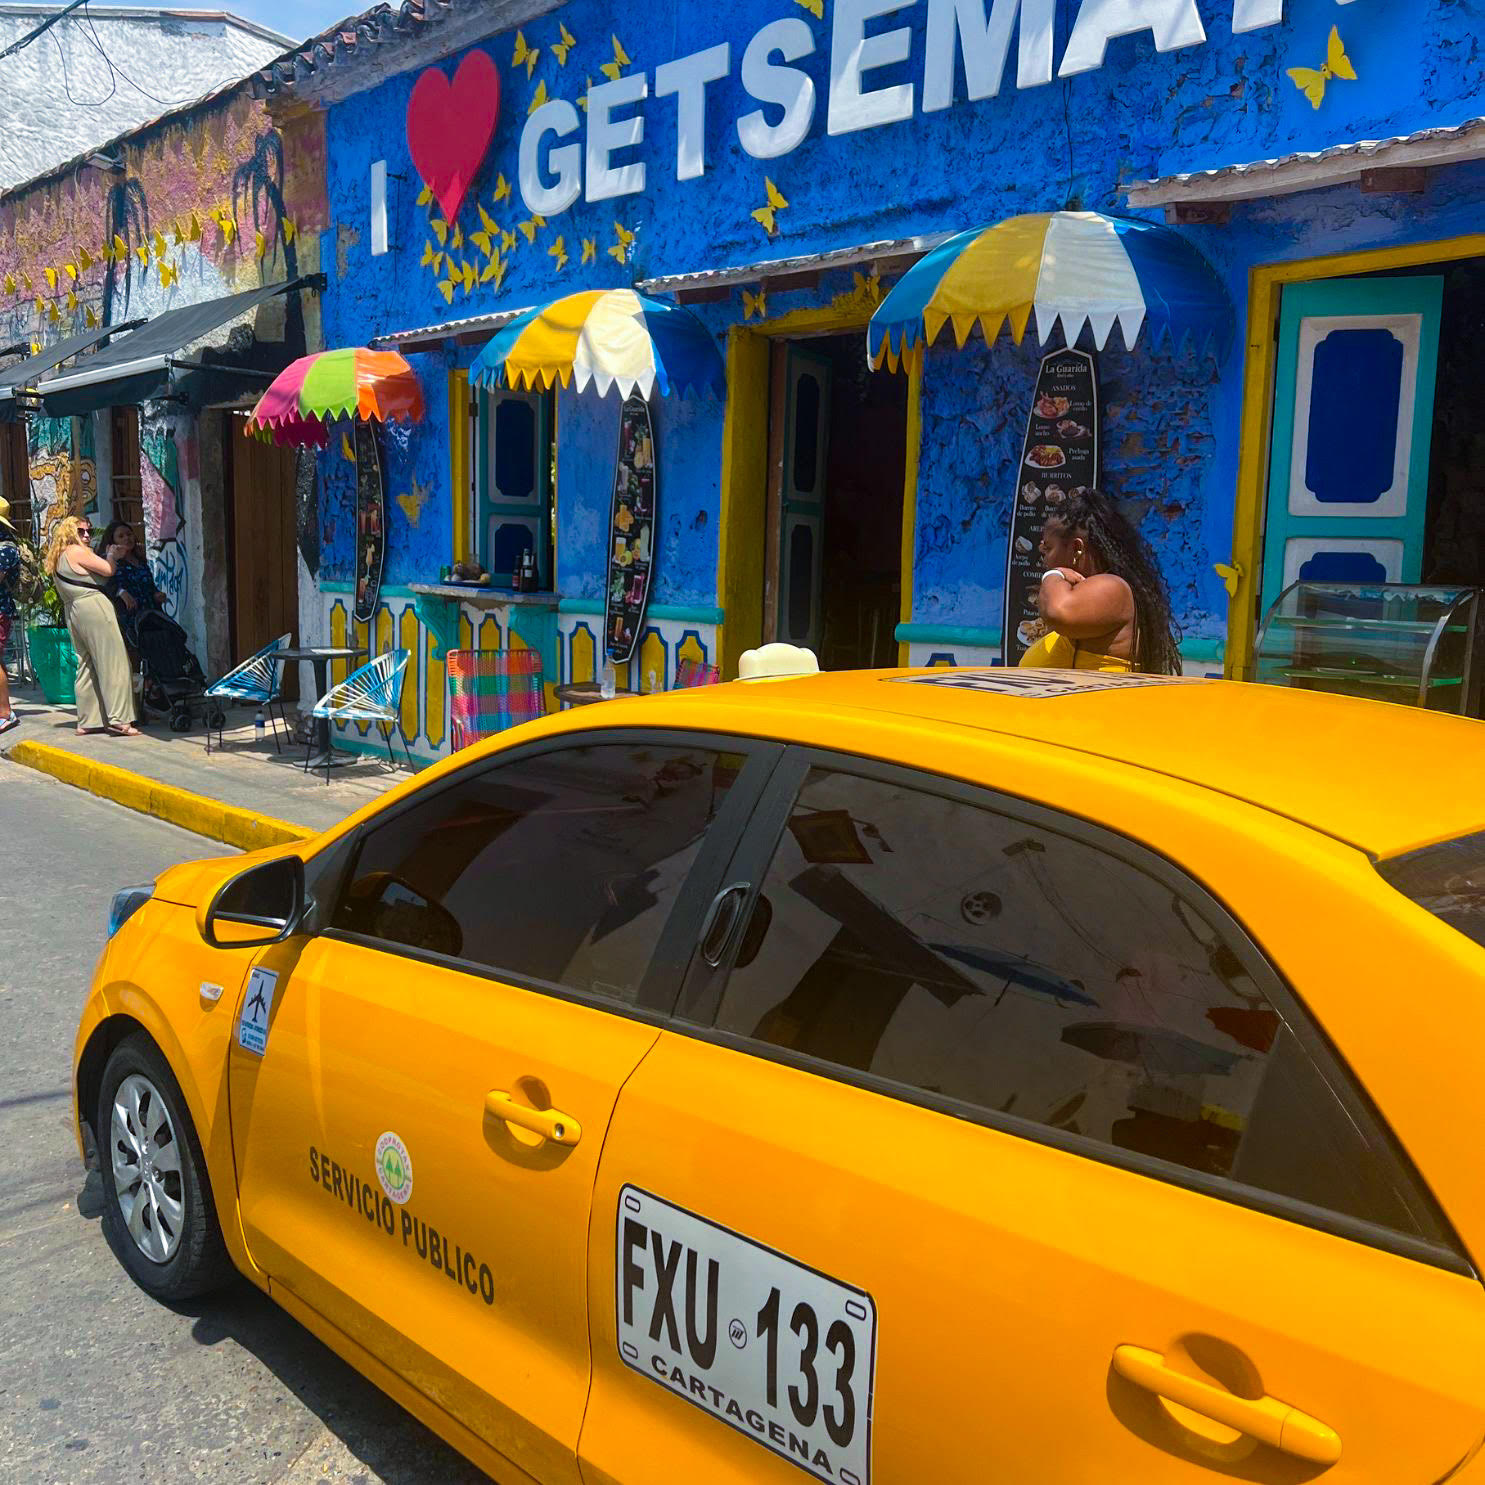 A taxi cab riding through Getsemani, a neighborhood in Cartagena 